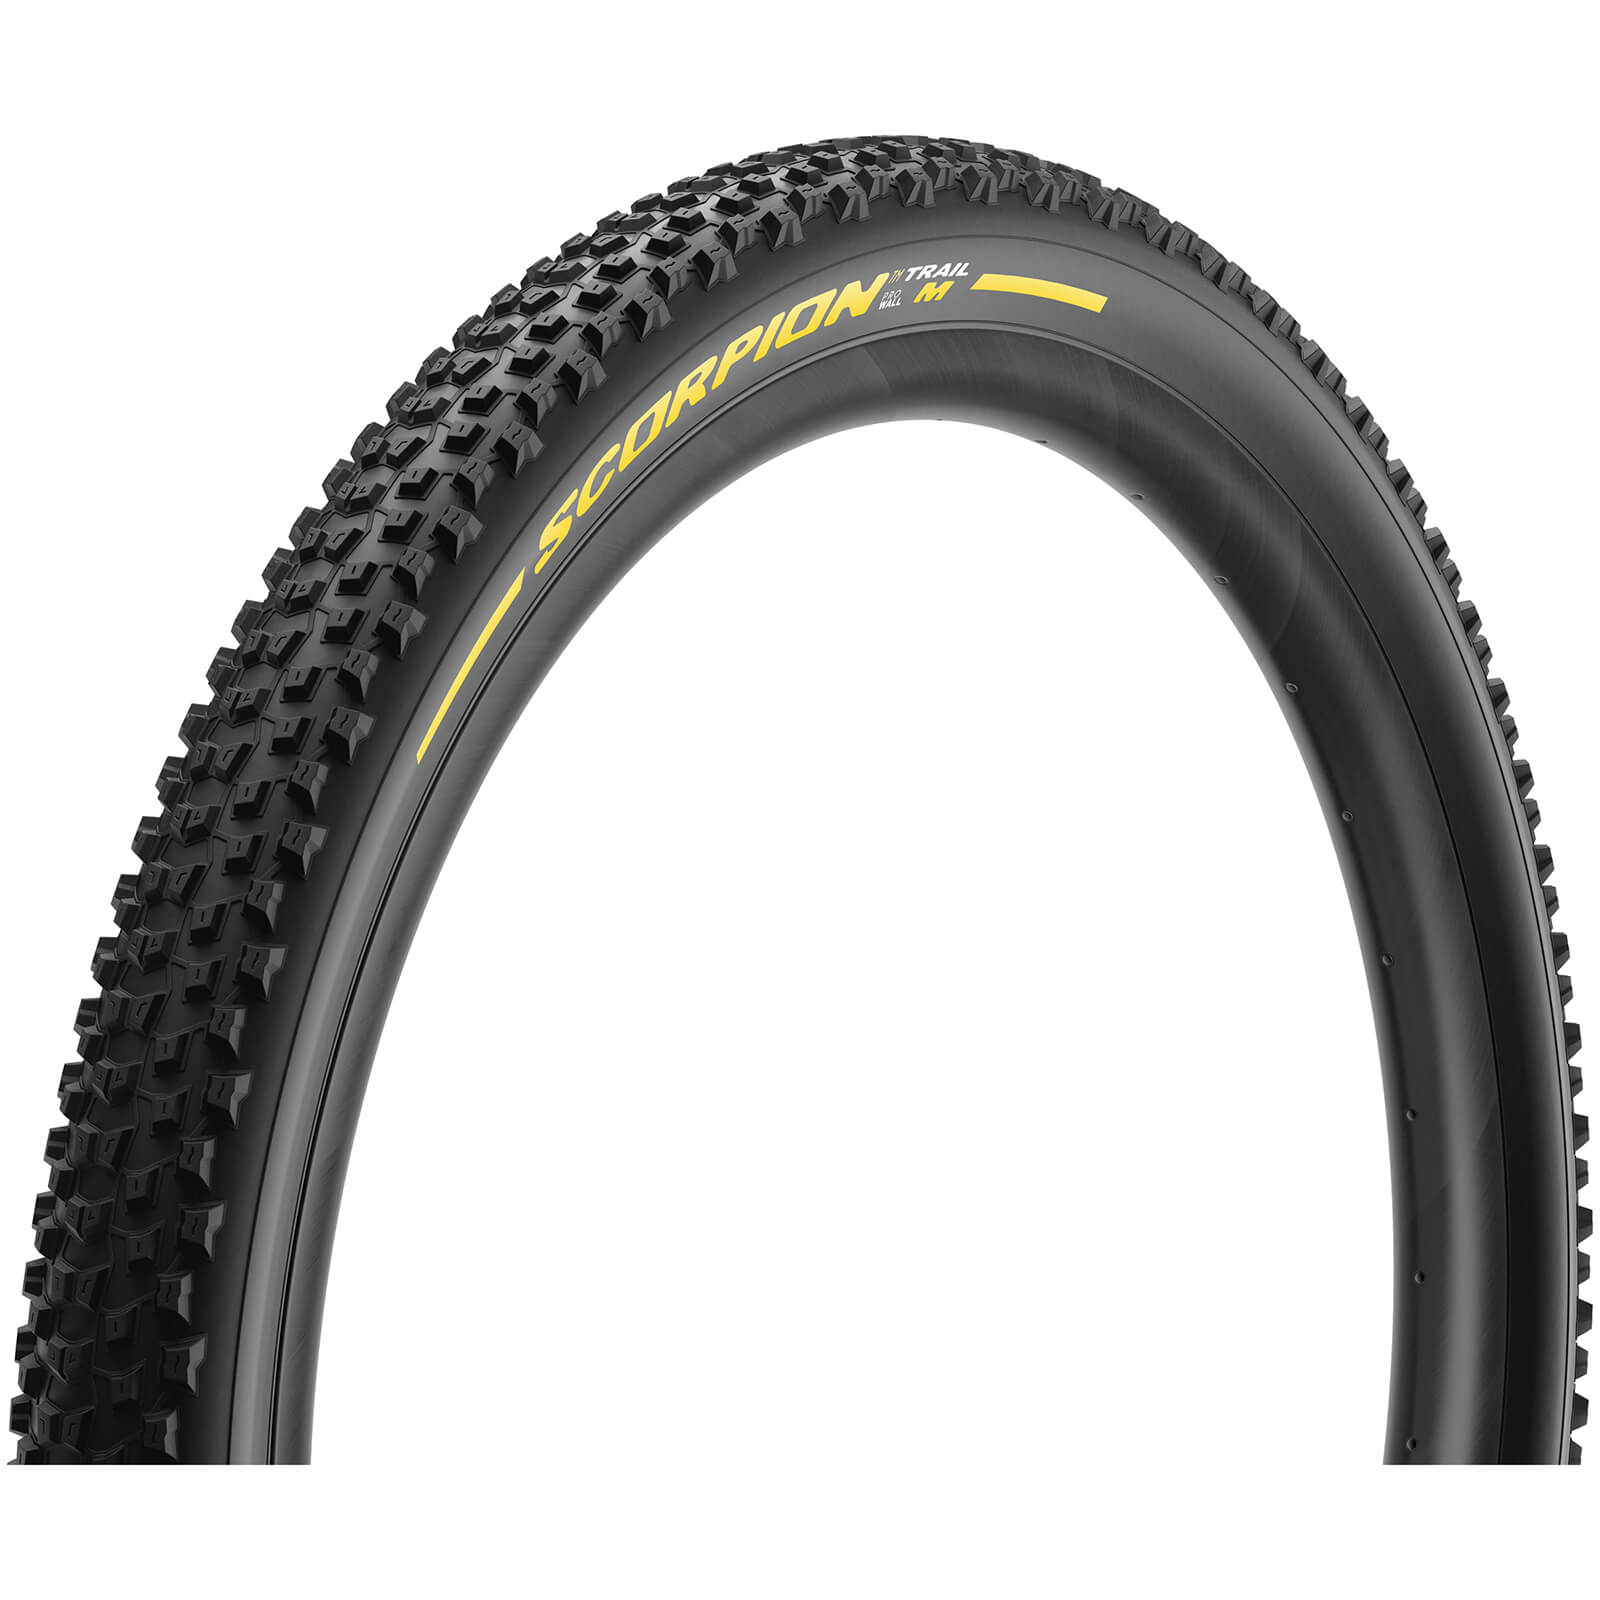 Pirelli Scorpion™ Trail M Team Edition MTB Tyre - 29in x 2.4in - Yellow Label